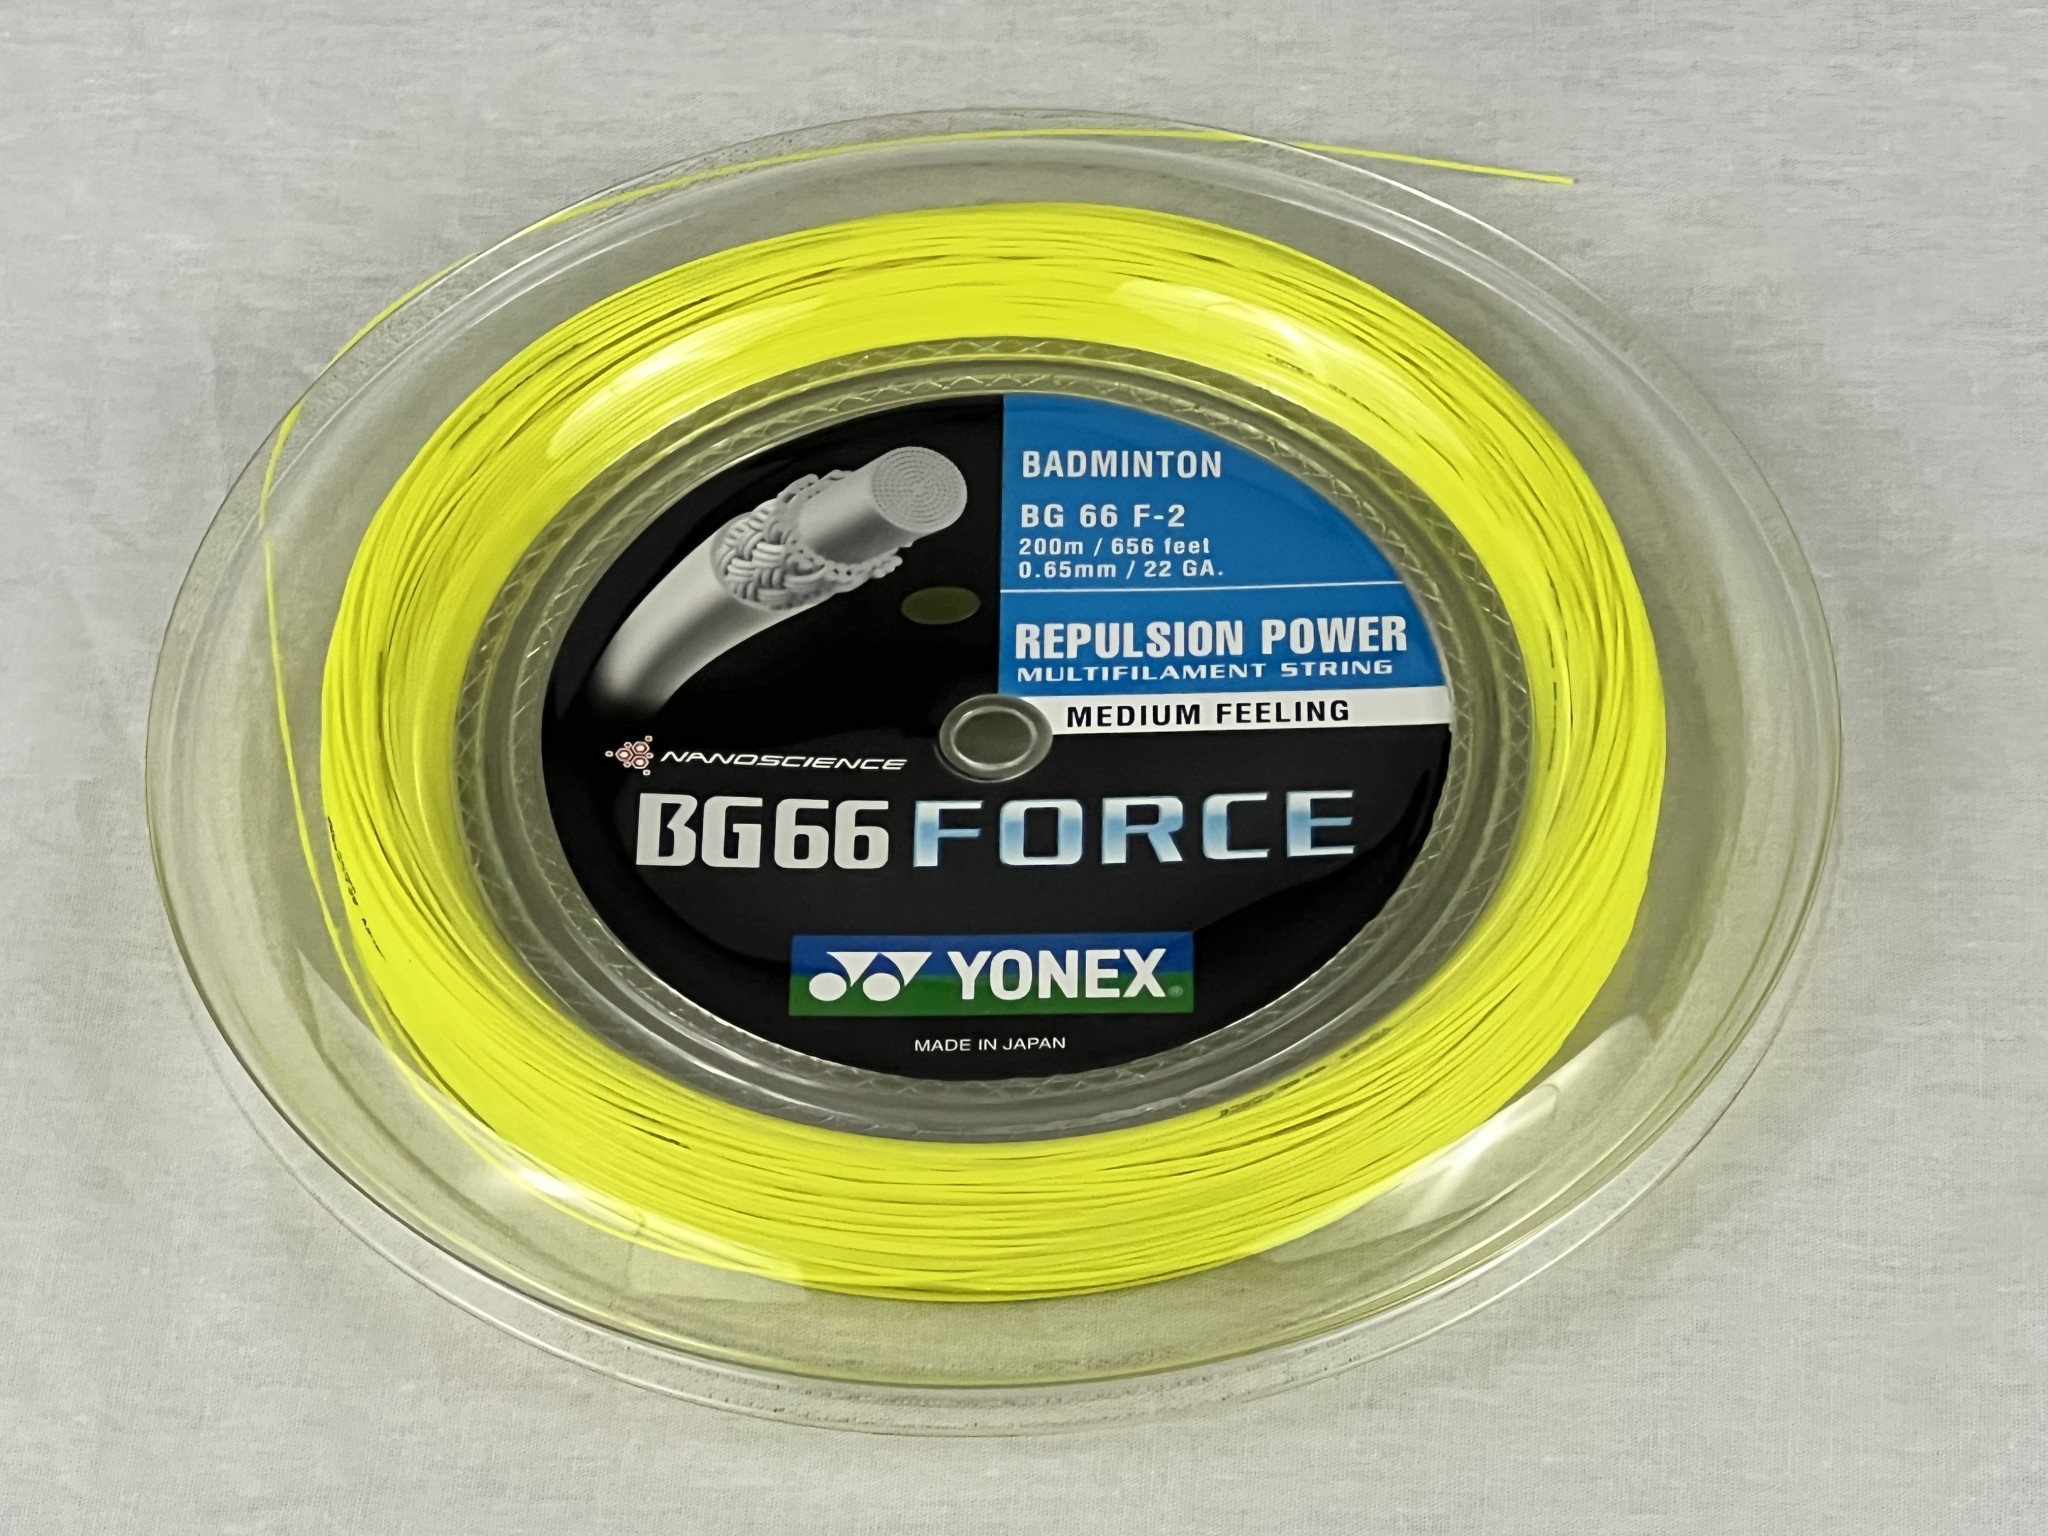 Yonex BG66 Force Badminton String Reel 200m /656 feet - Cayman